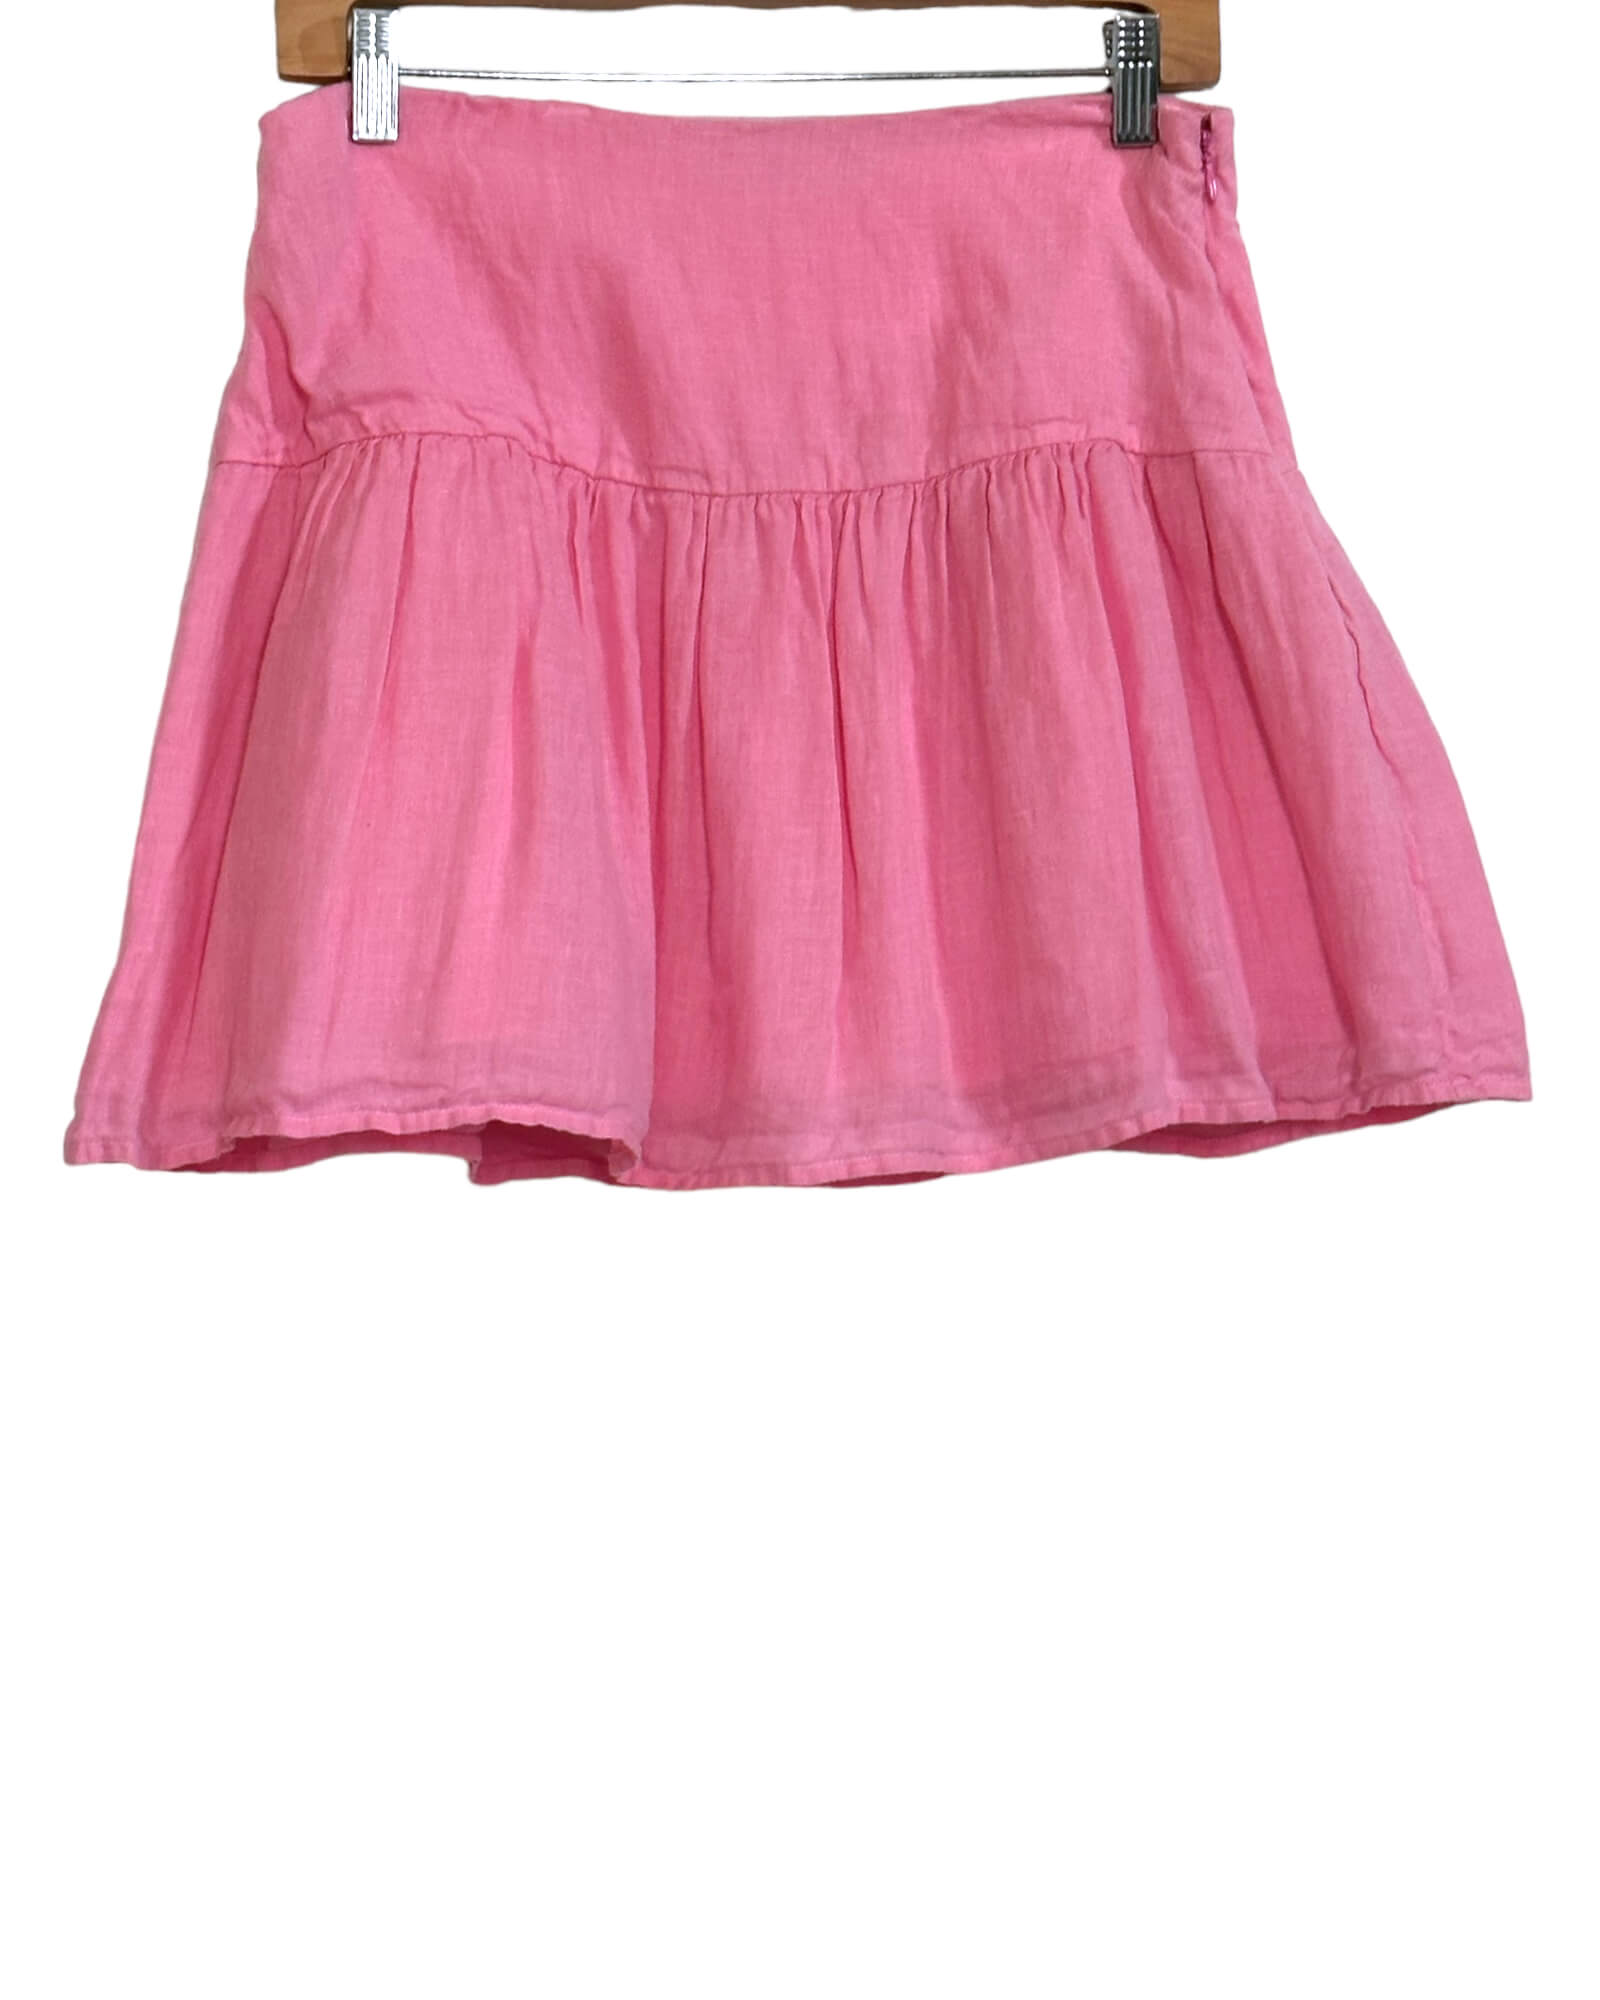 Light Summer VINEYARD VINES hollyhock pink linen ruffle mini skirt